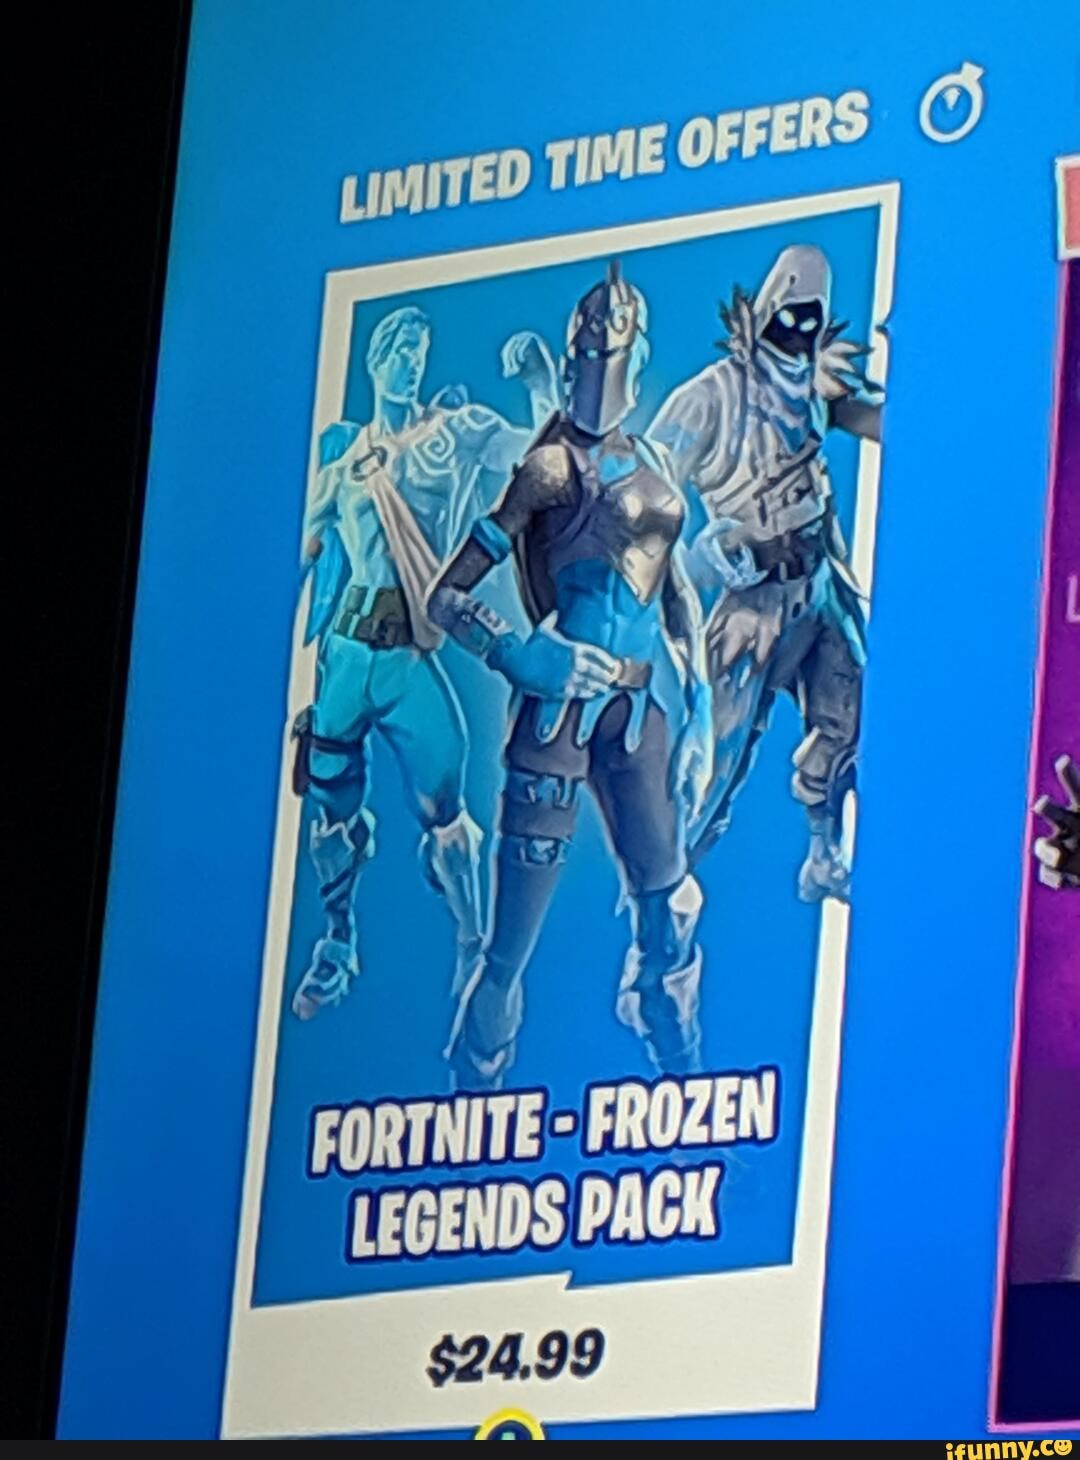 Frozen Legends Pack